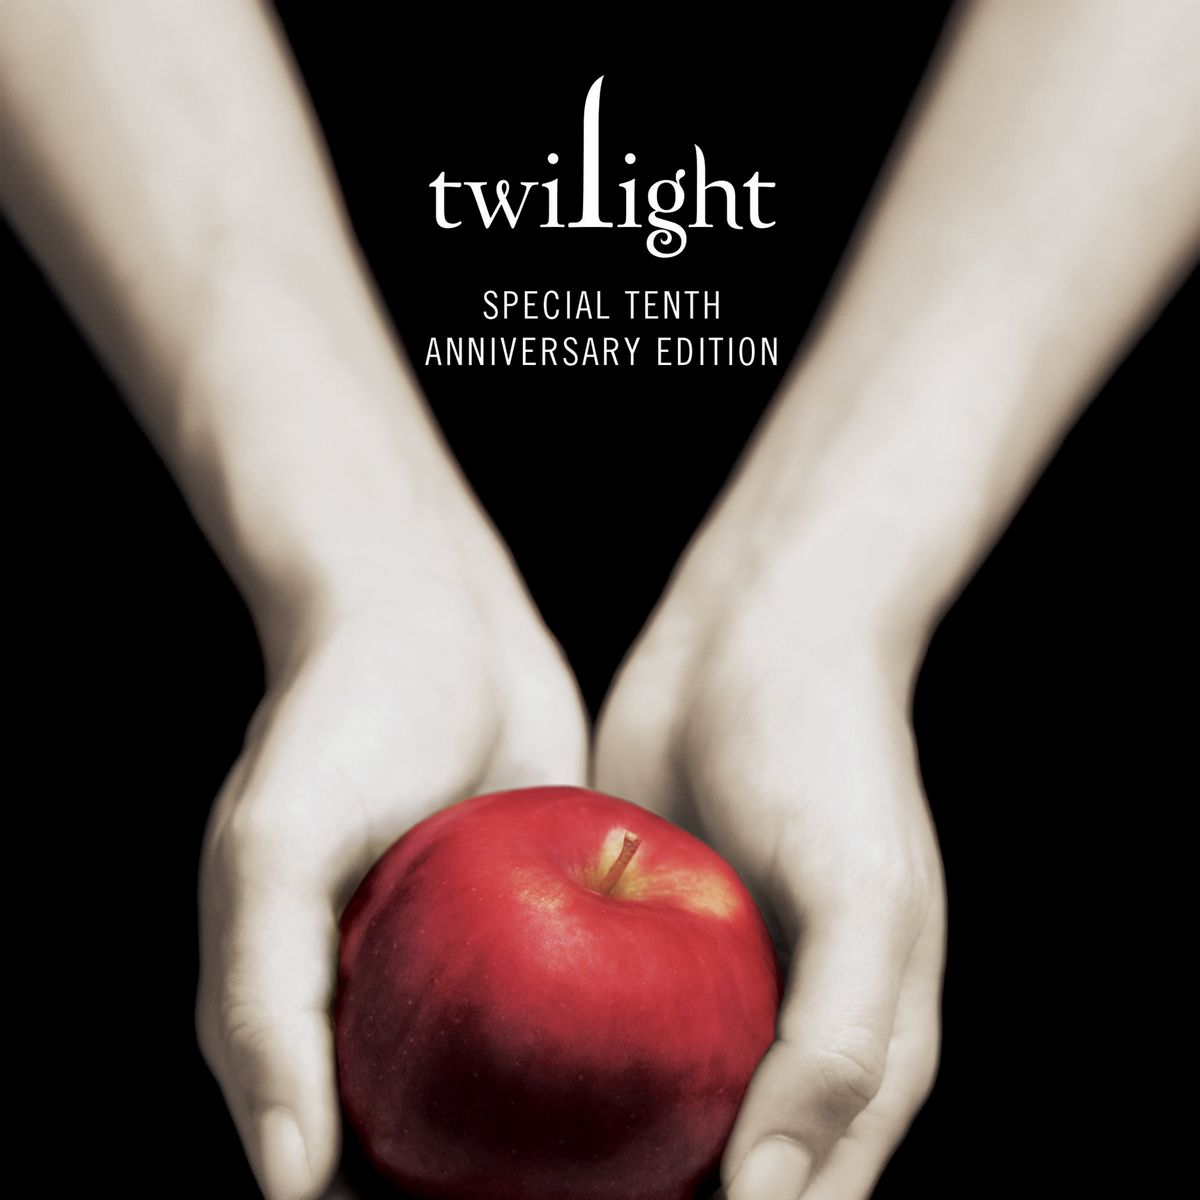 New Twilight edition will feature bonus content